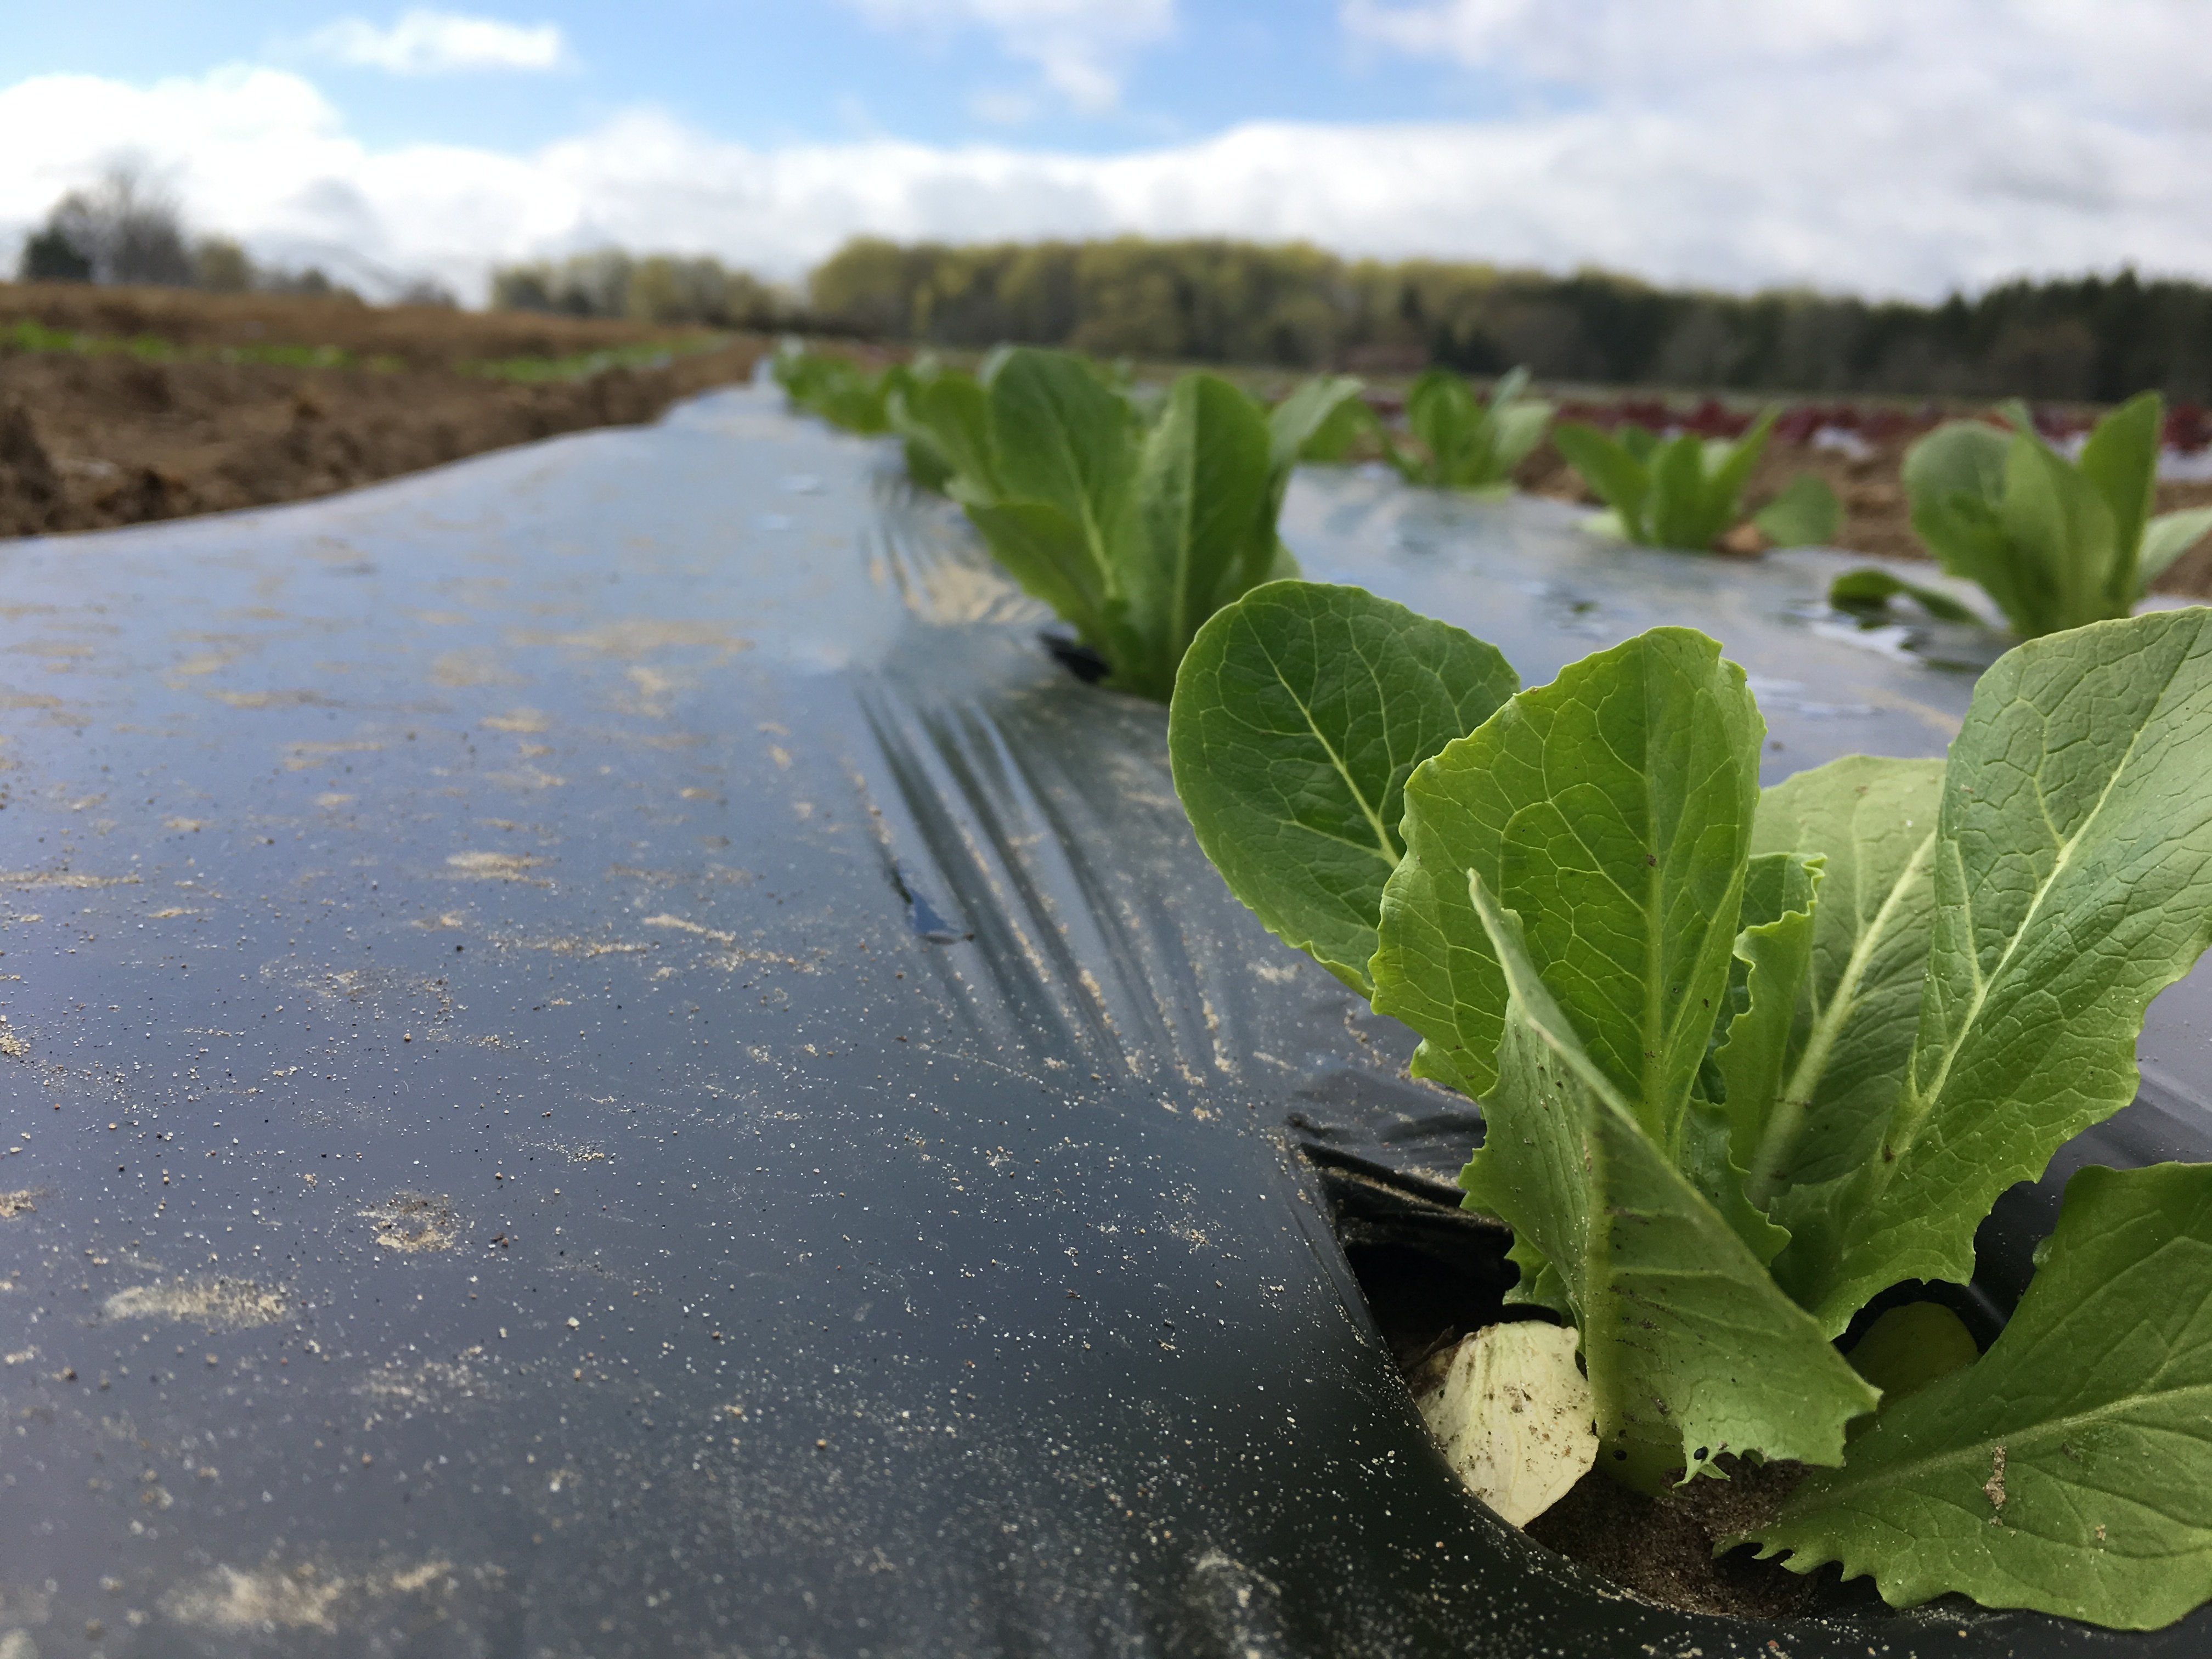 Next Happening: Week 1 of 20; Summer 2019 Vegetable Share-Coopers CSA Farm Happenings